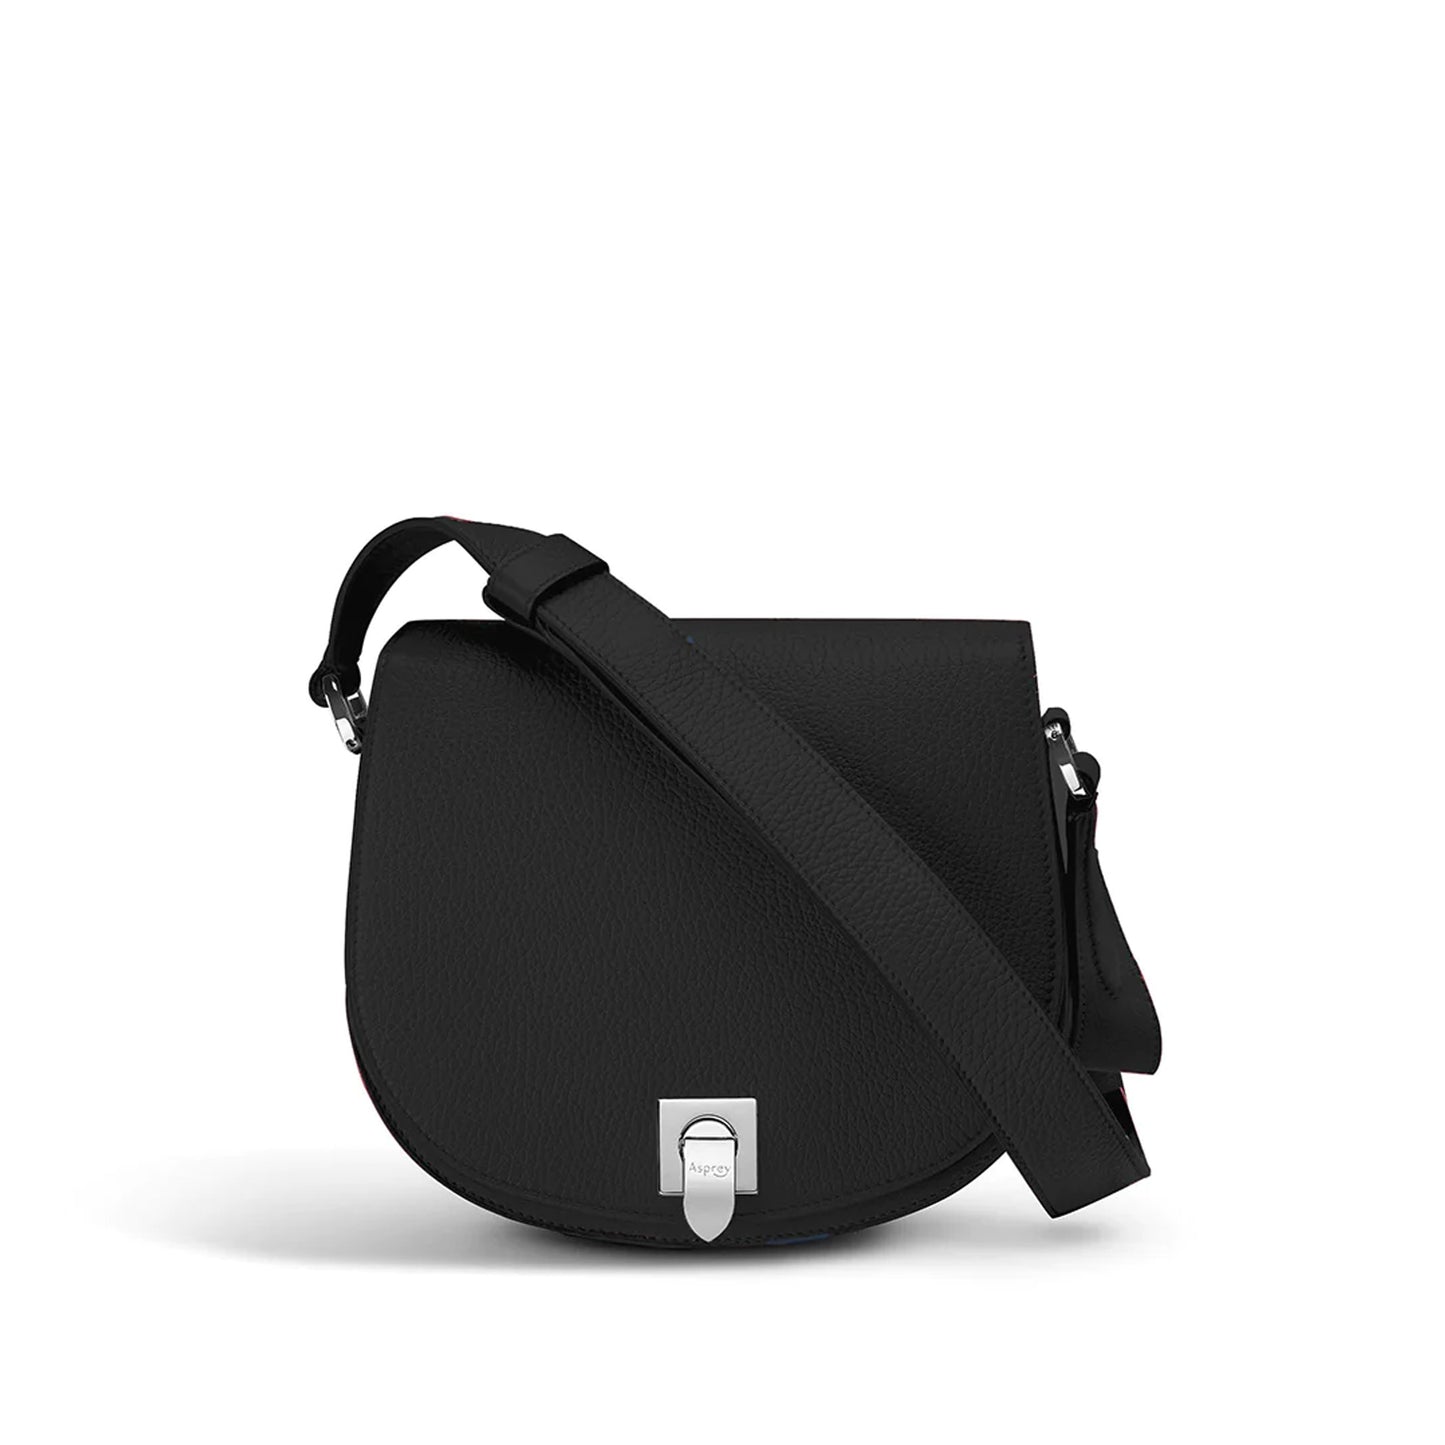 Polo Small Handbag in Soft Grain Leather